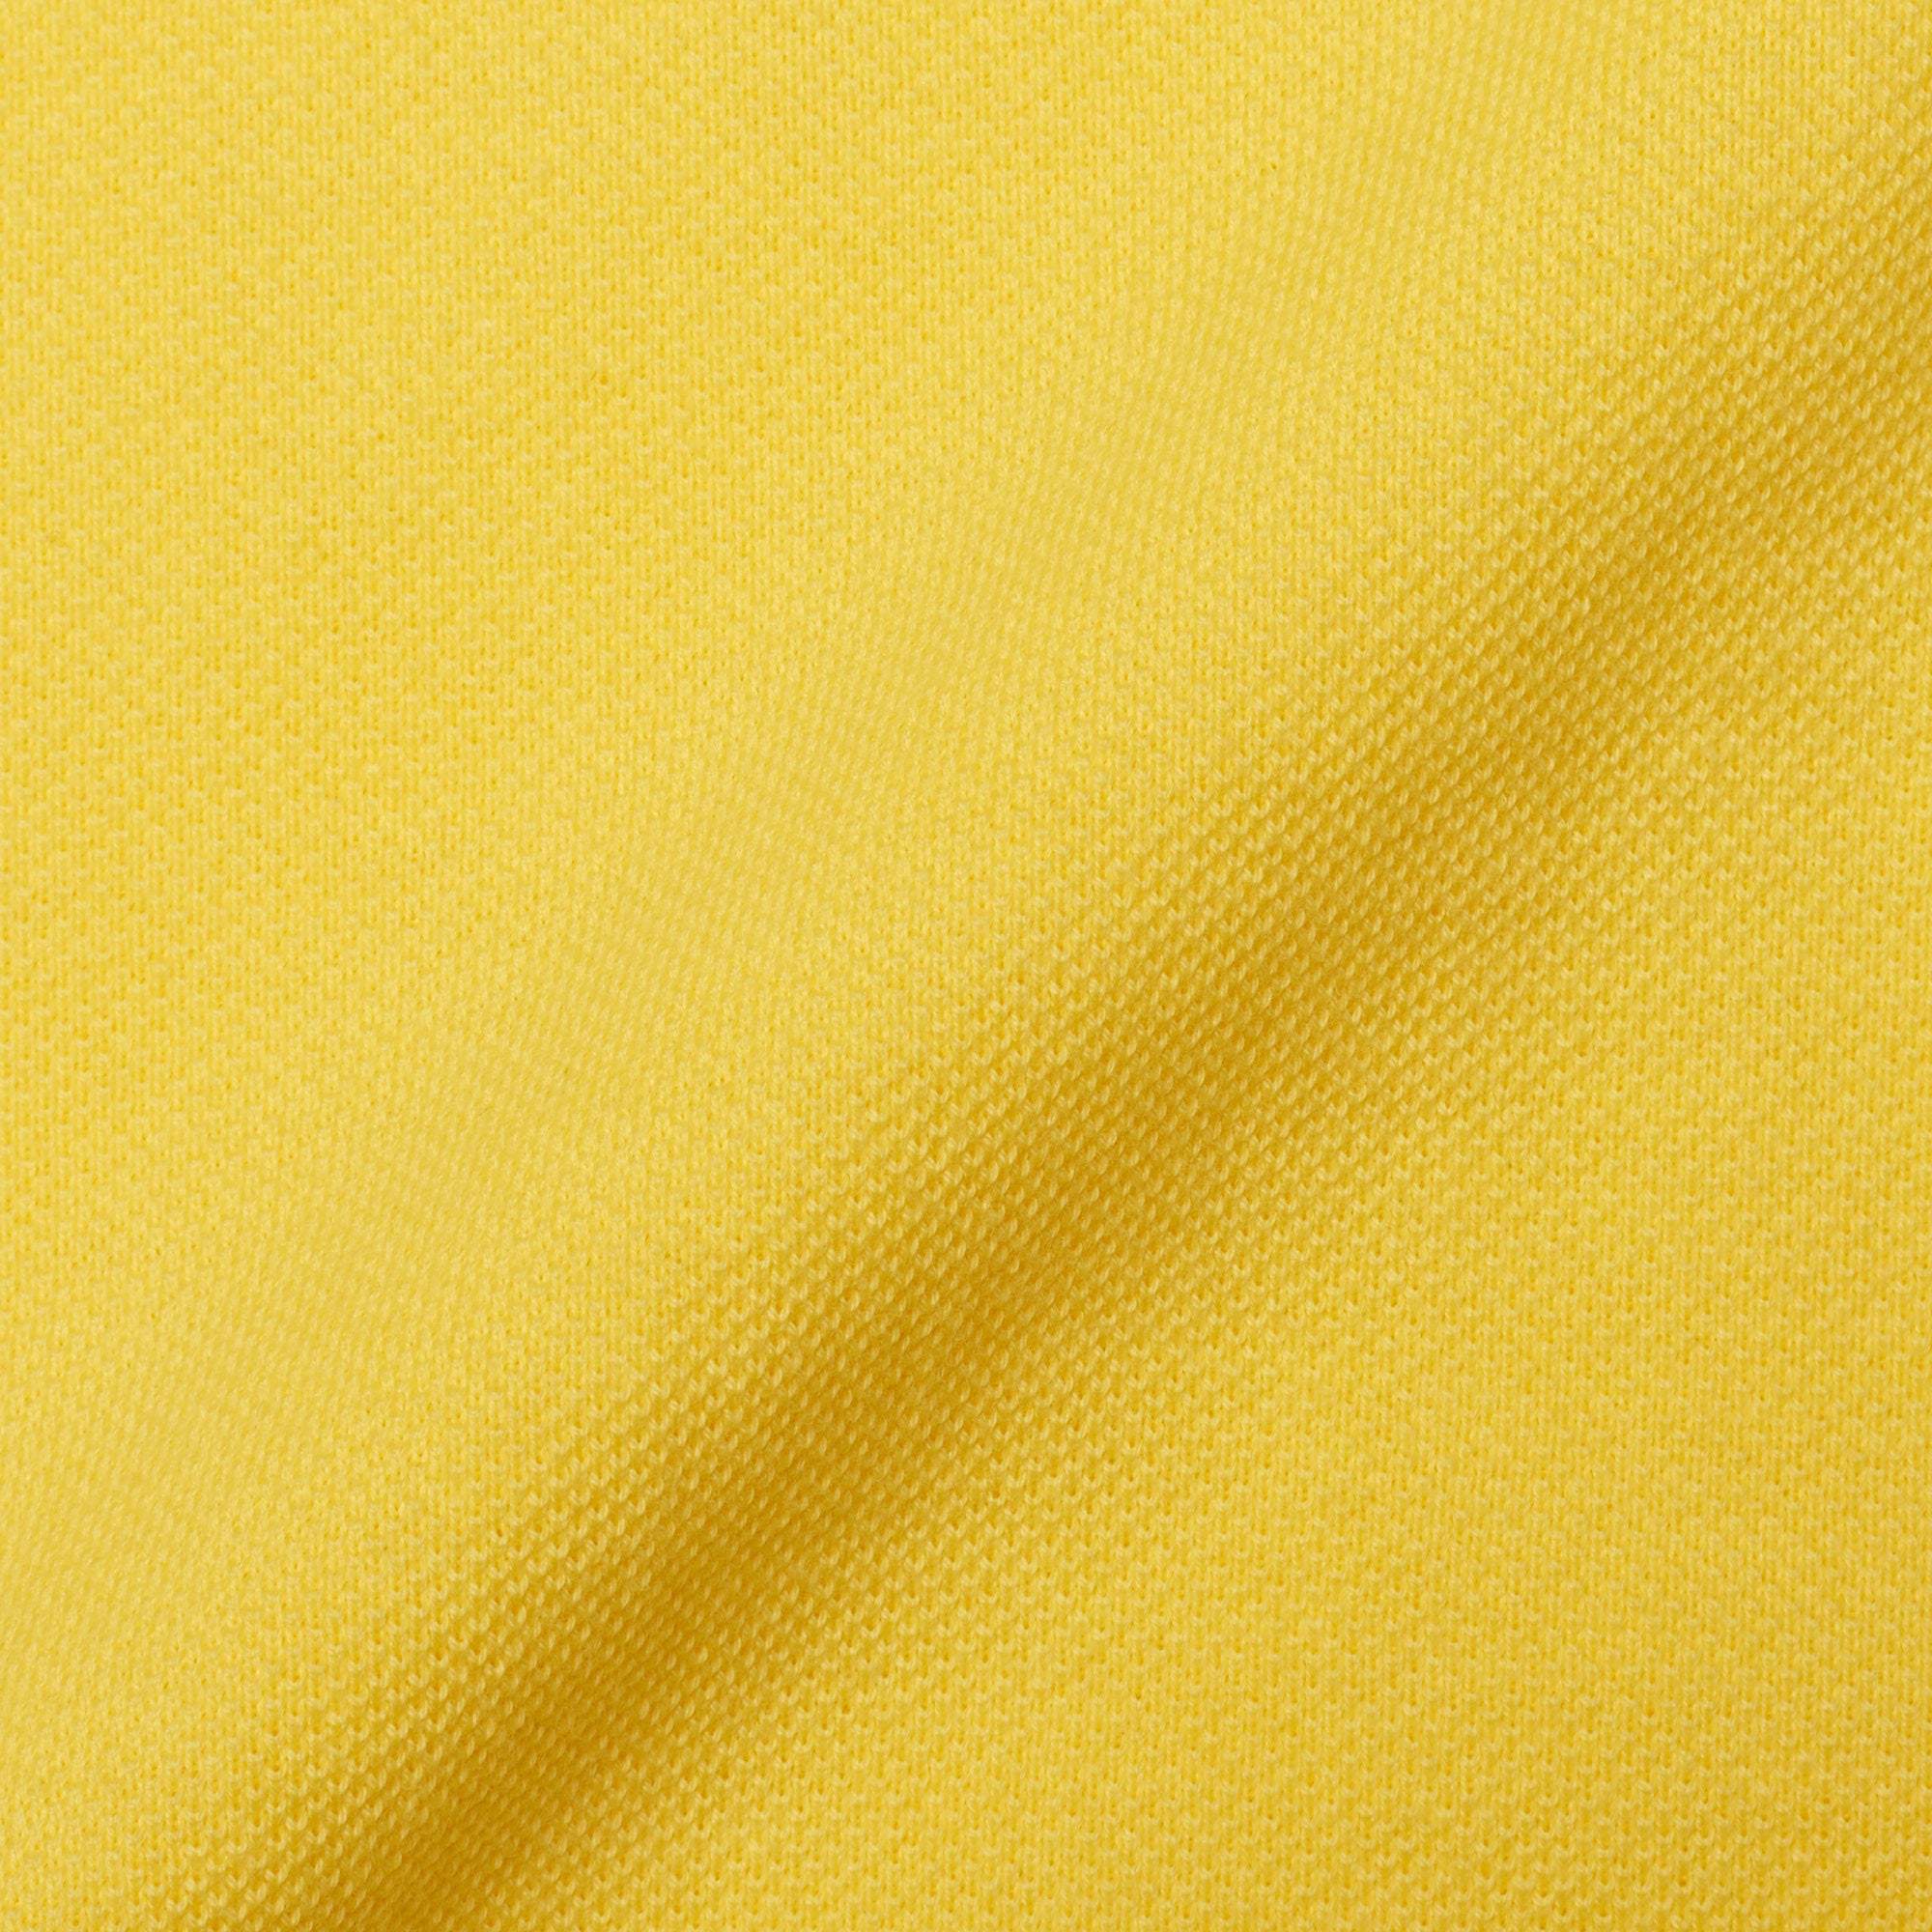 FEDELI "North" Yellow Cotton Pique Short Sleeve Polo Shirt EU 52 NEW US L FEDELI